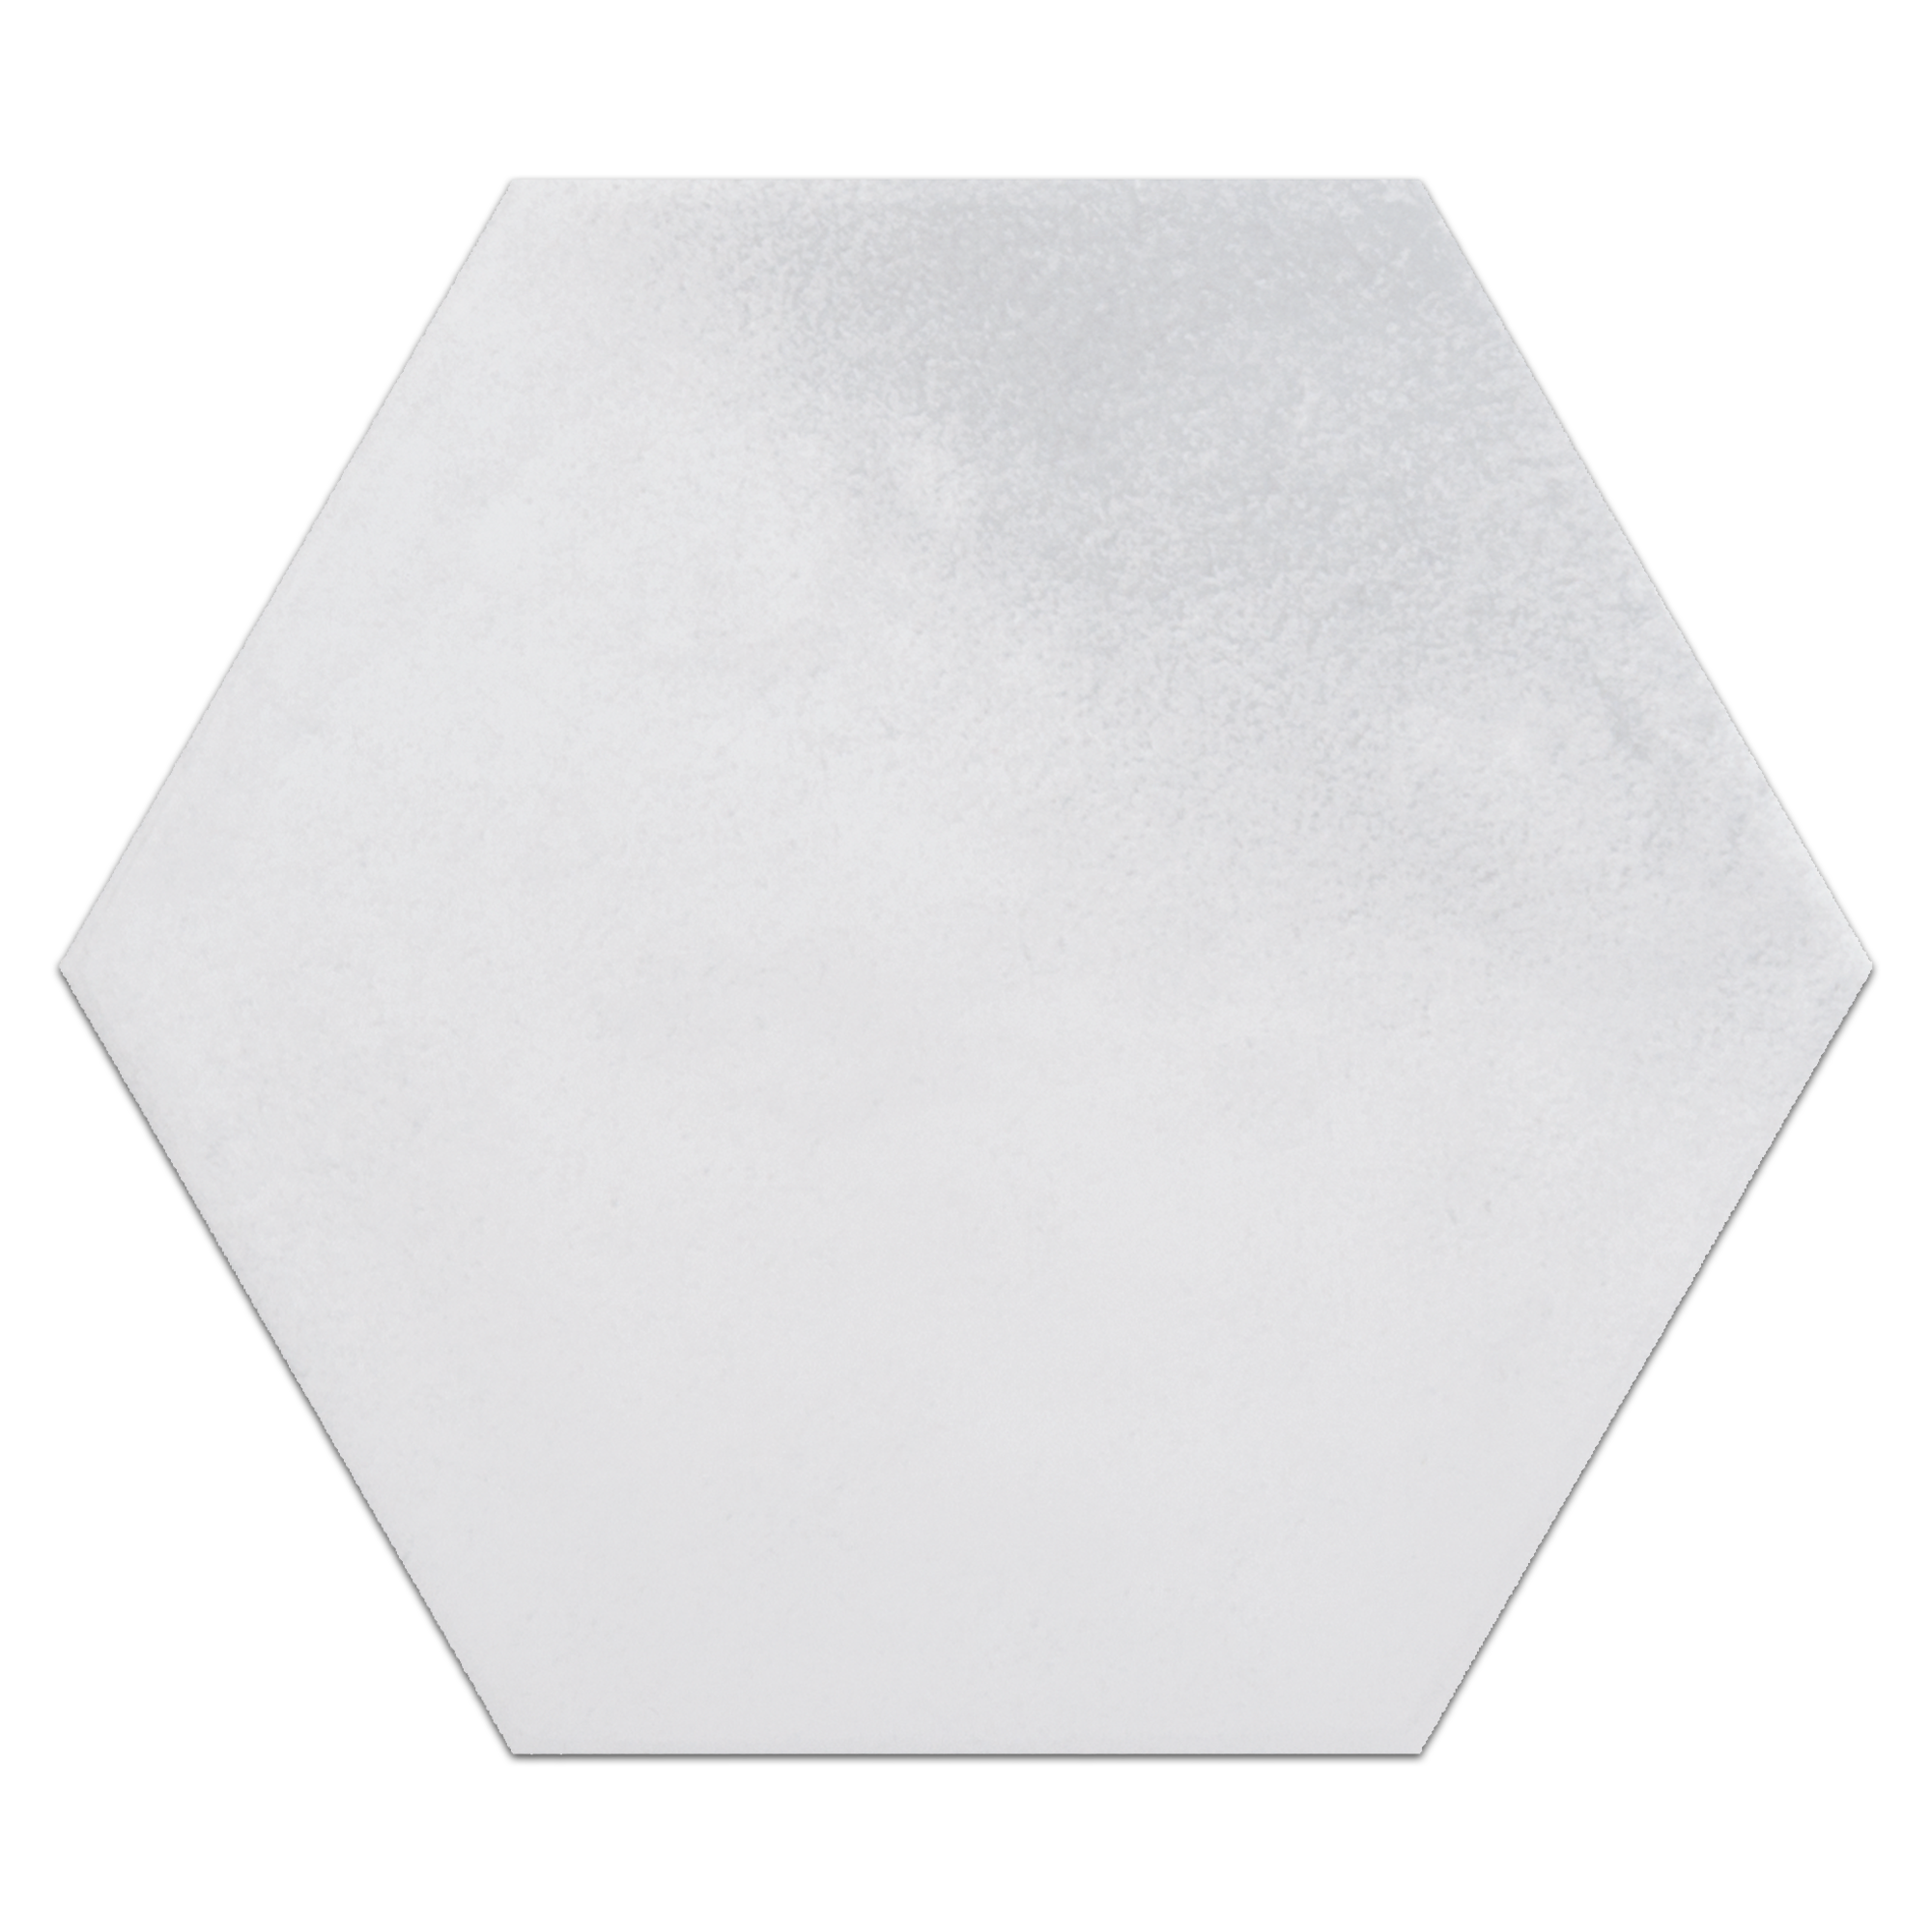 Elon Moon White Ceramic Hexagon Wall Tile 6.25x7.25x8.5mm Glossy CT330 Surface Group International Product